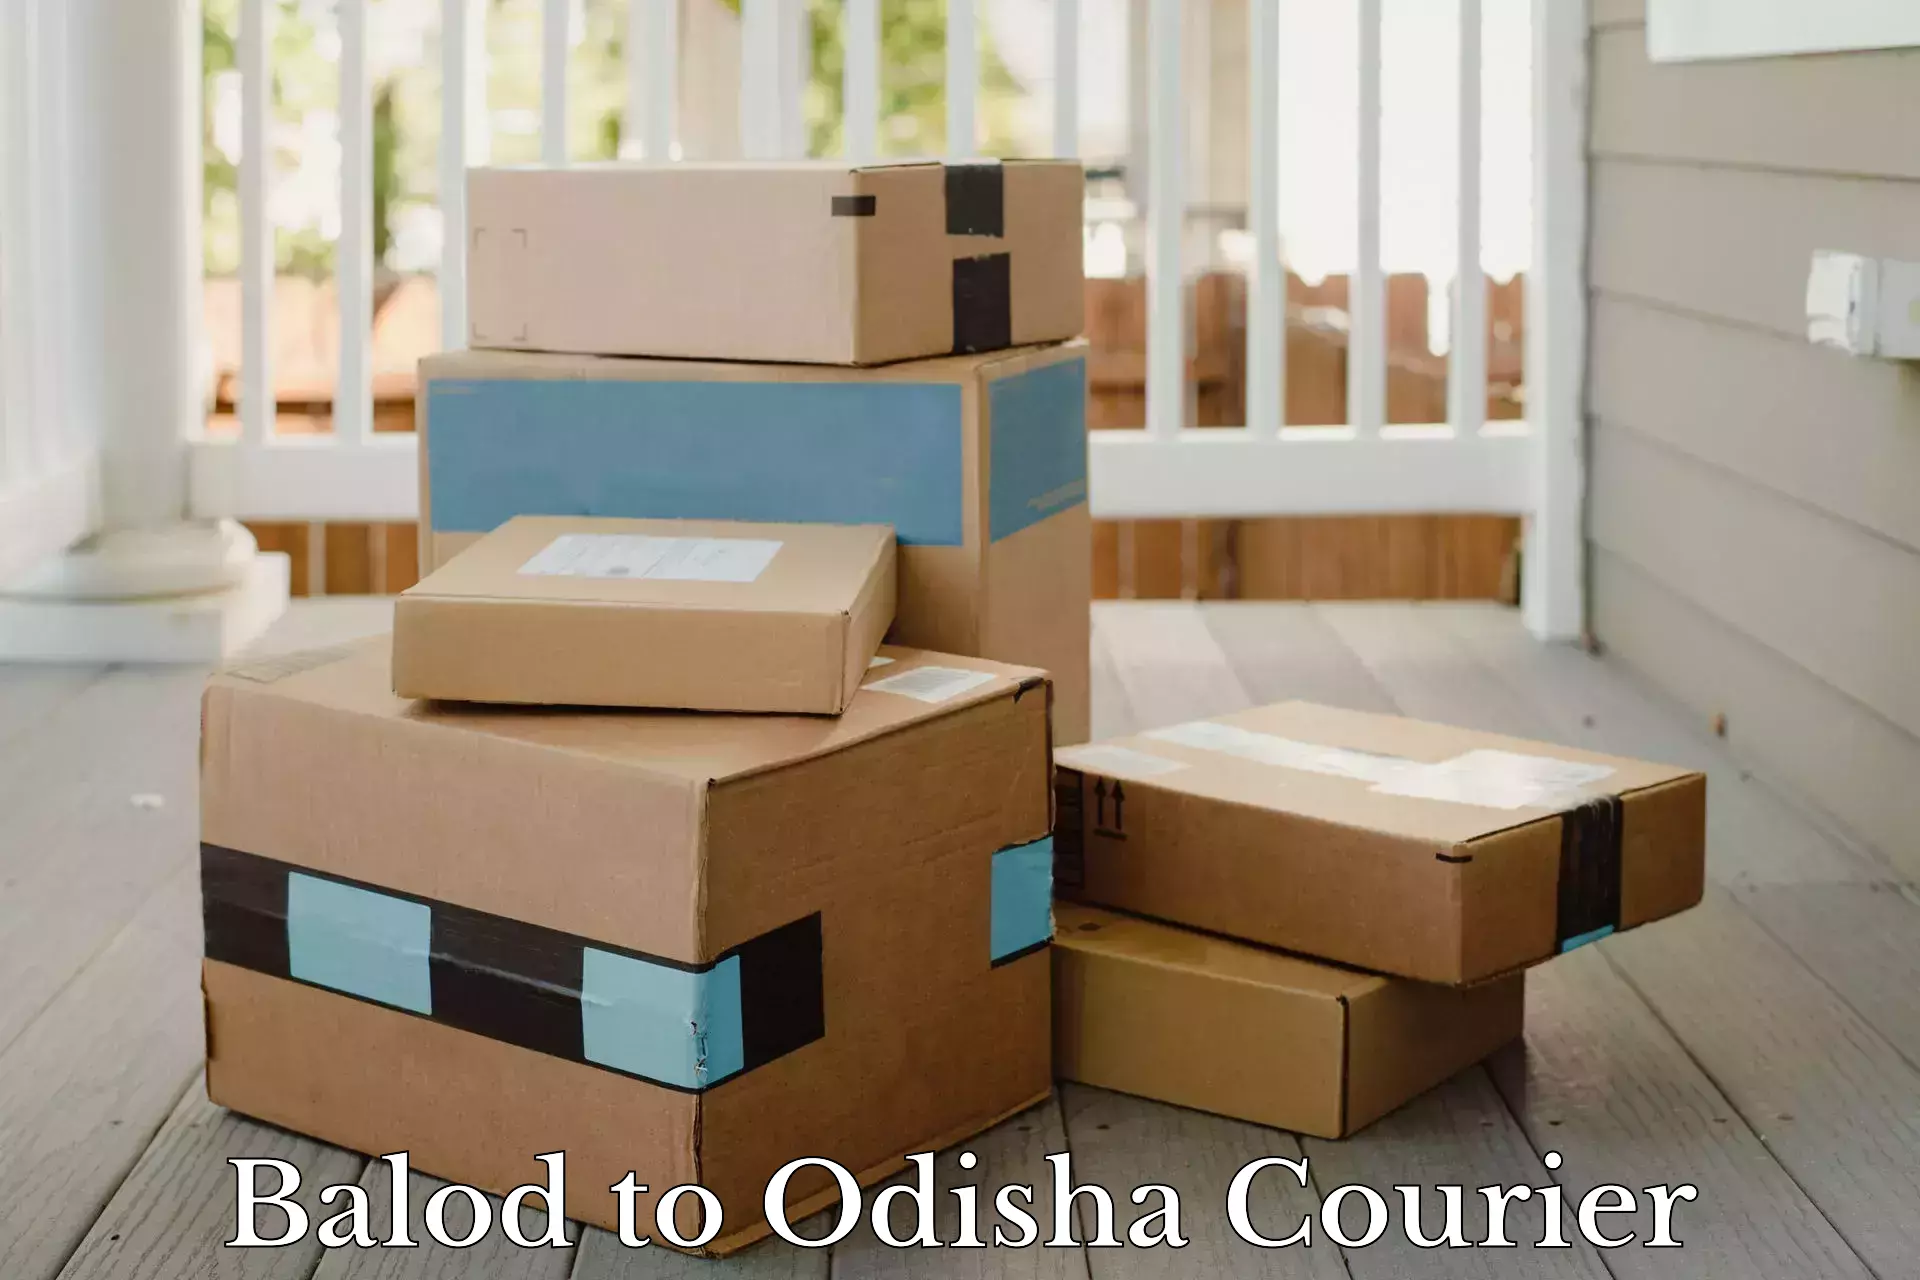 Subscription-based courier Balod to Odisha